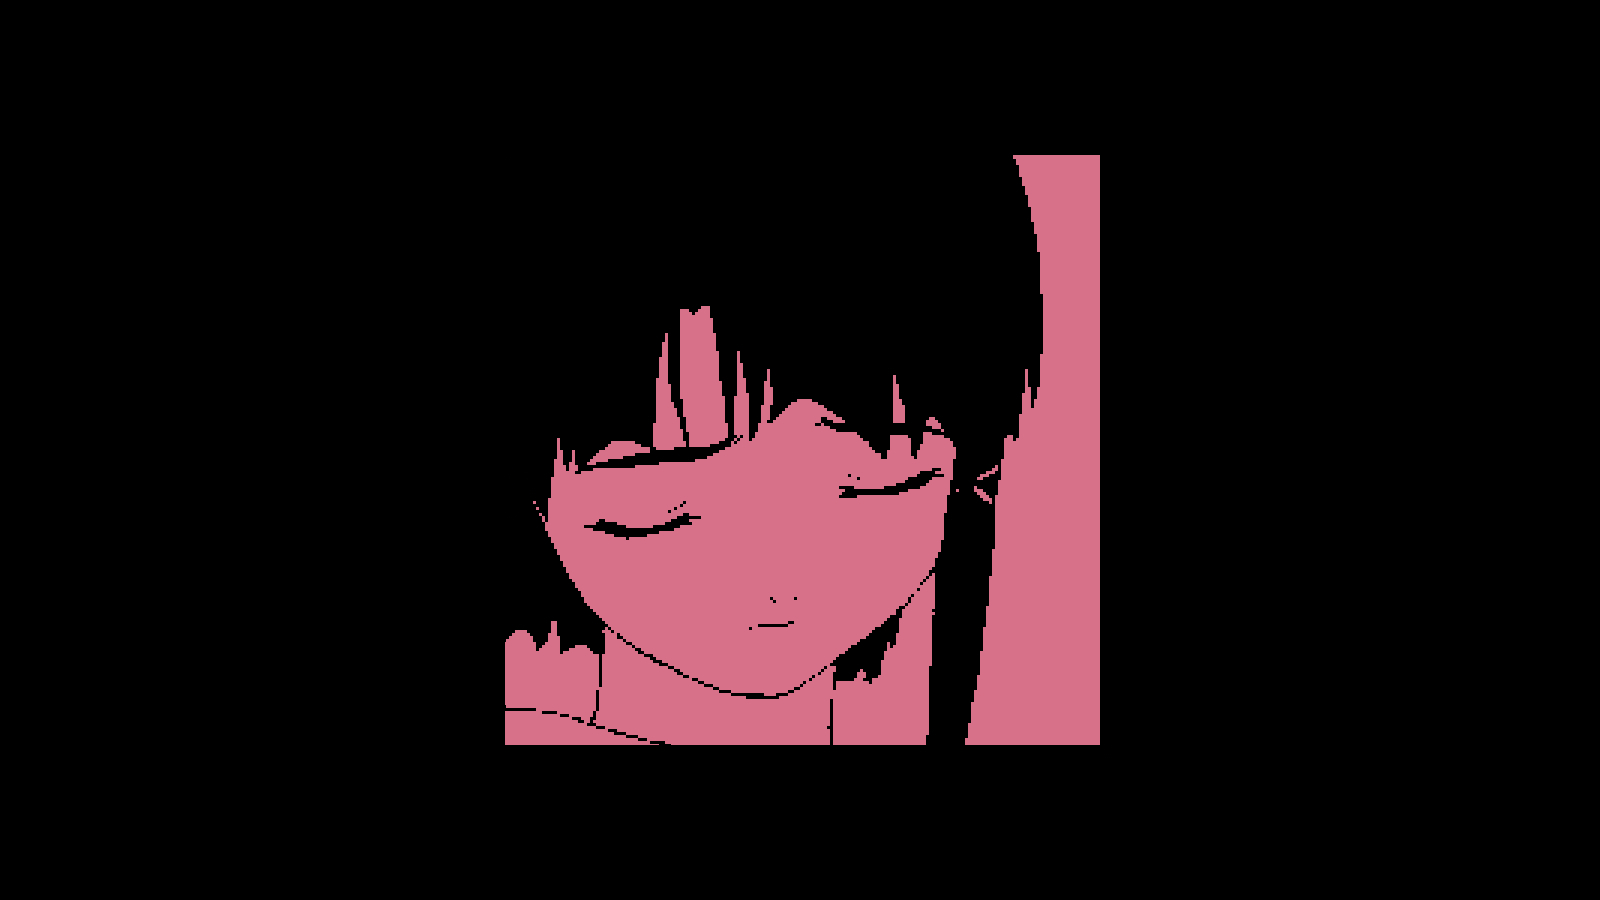 Anime 1600x900 Lain Iwakura Serial Experiments Lain black background closed eyes pink